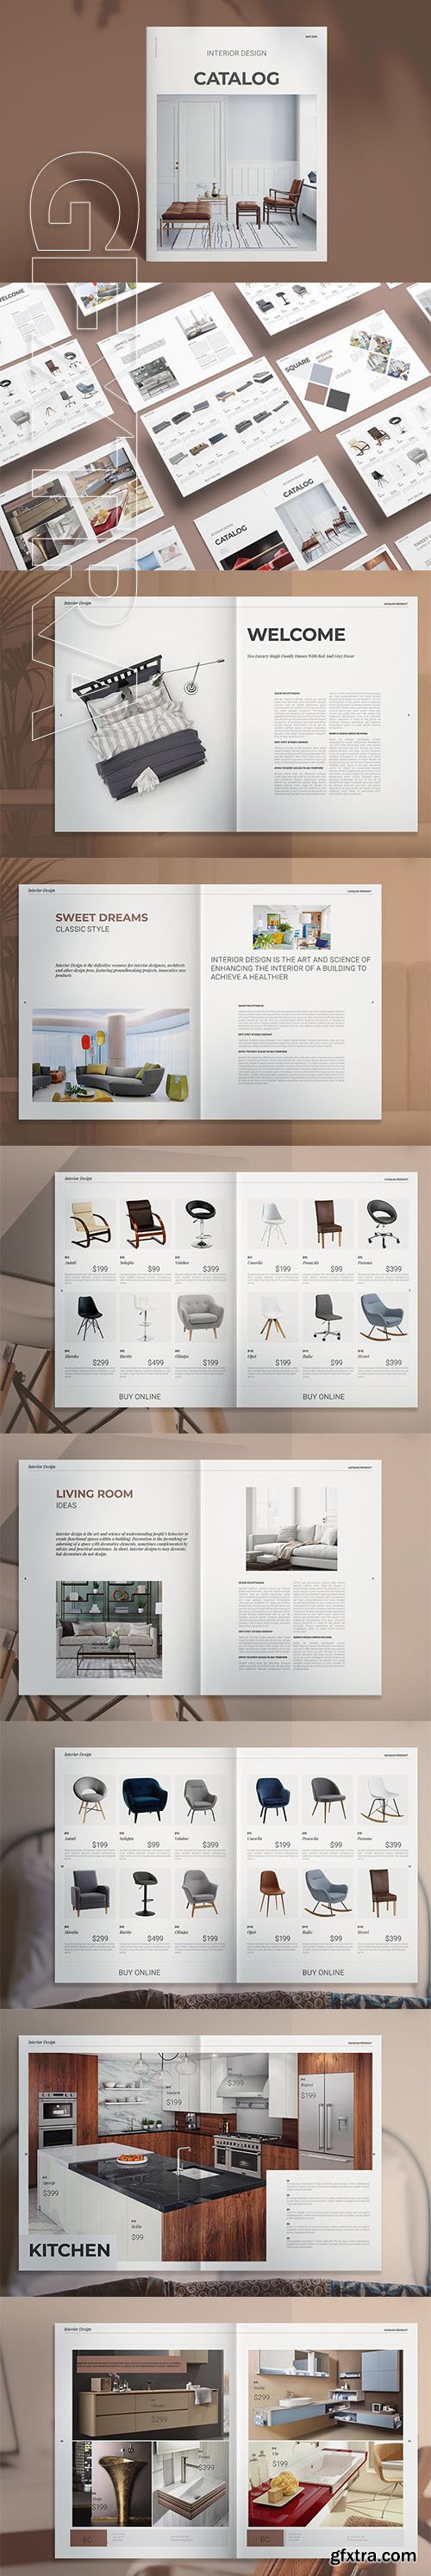 CreativeMarket - Interior Design Product Catalog 3714666